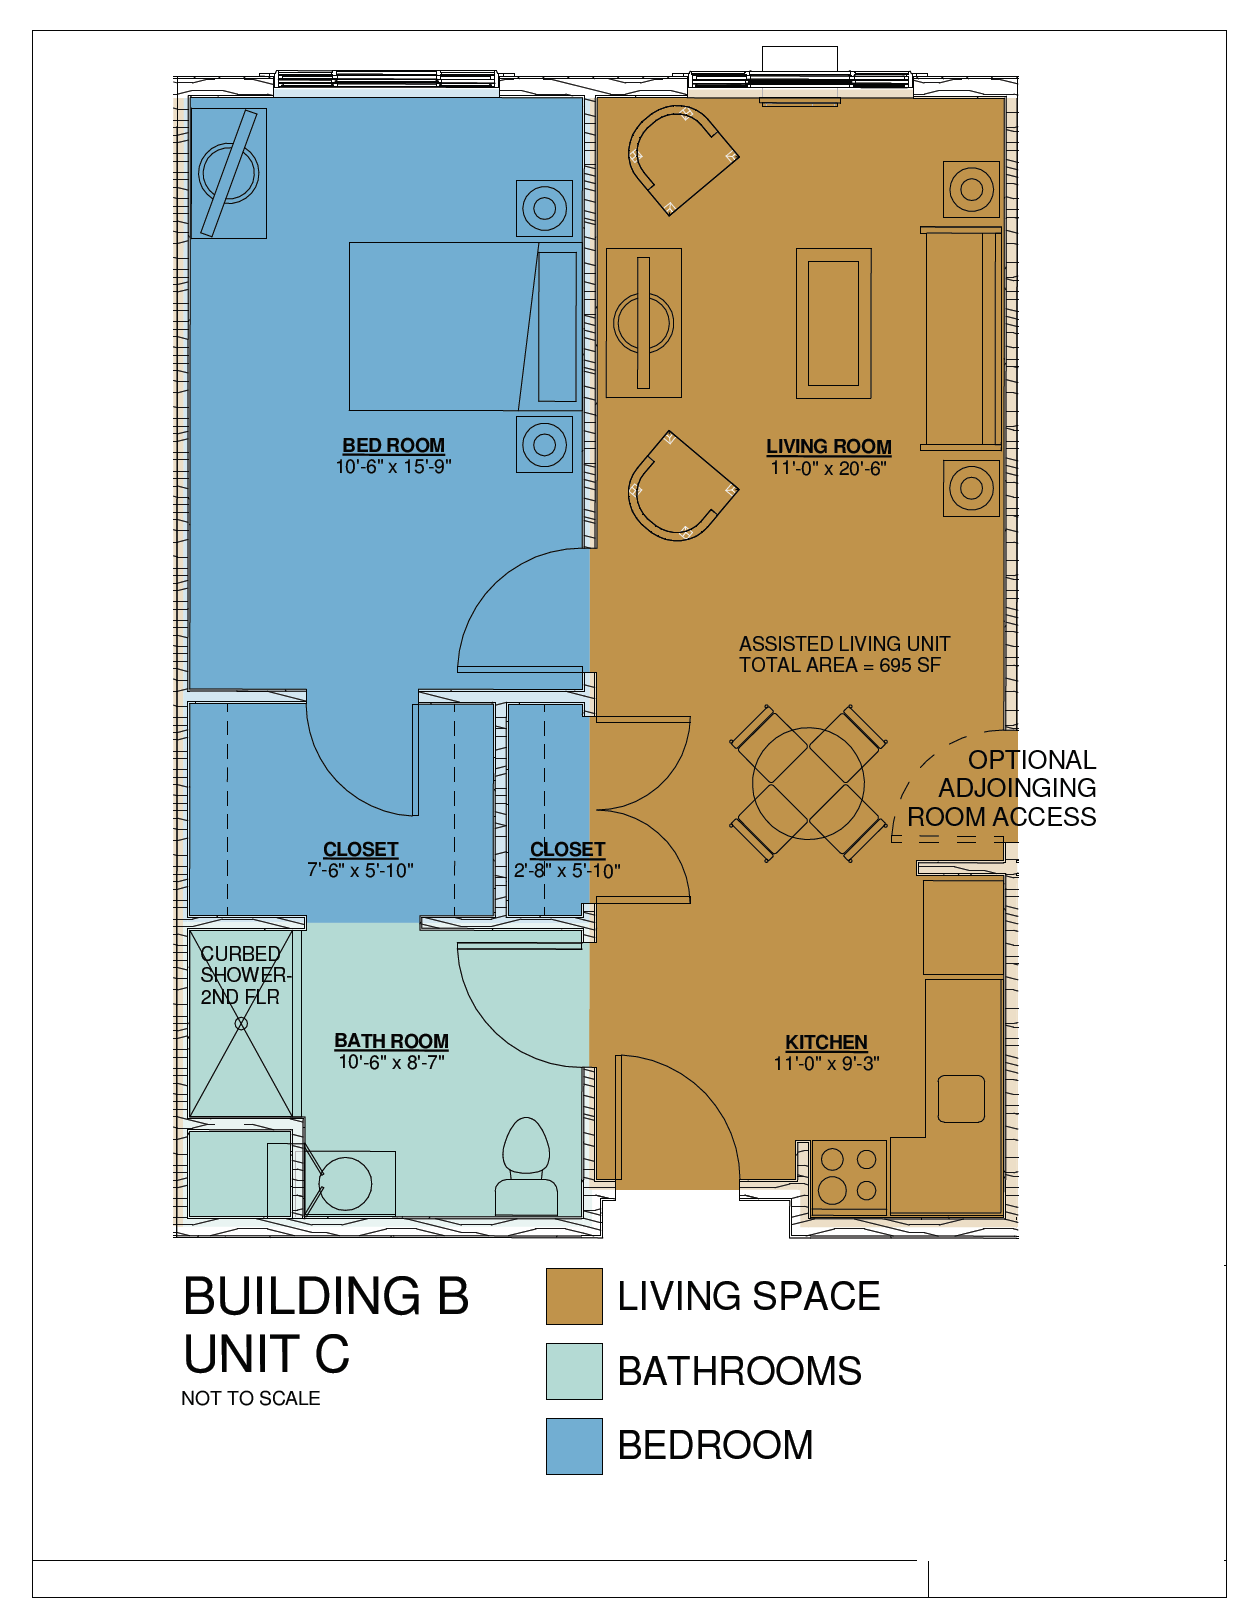 Building b unit c floor plan.